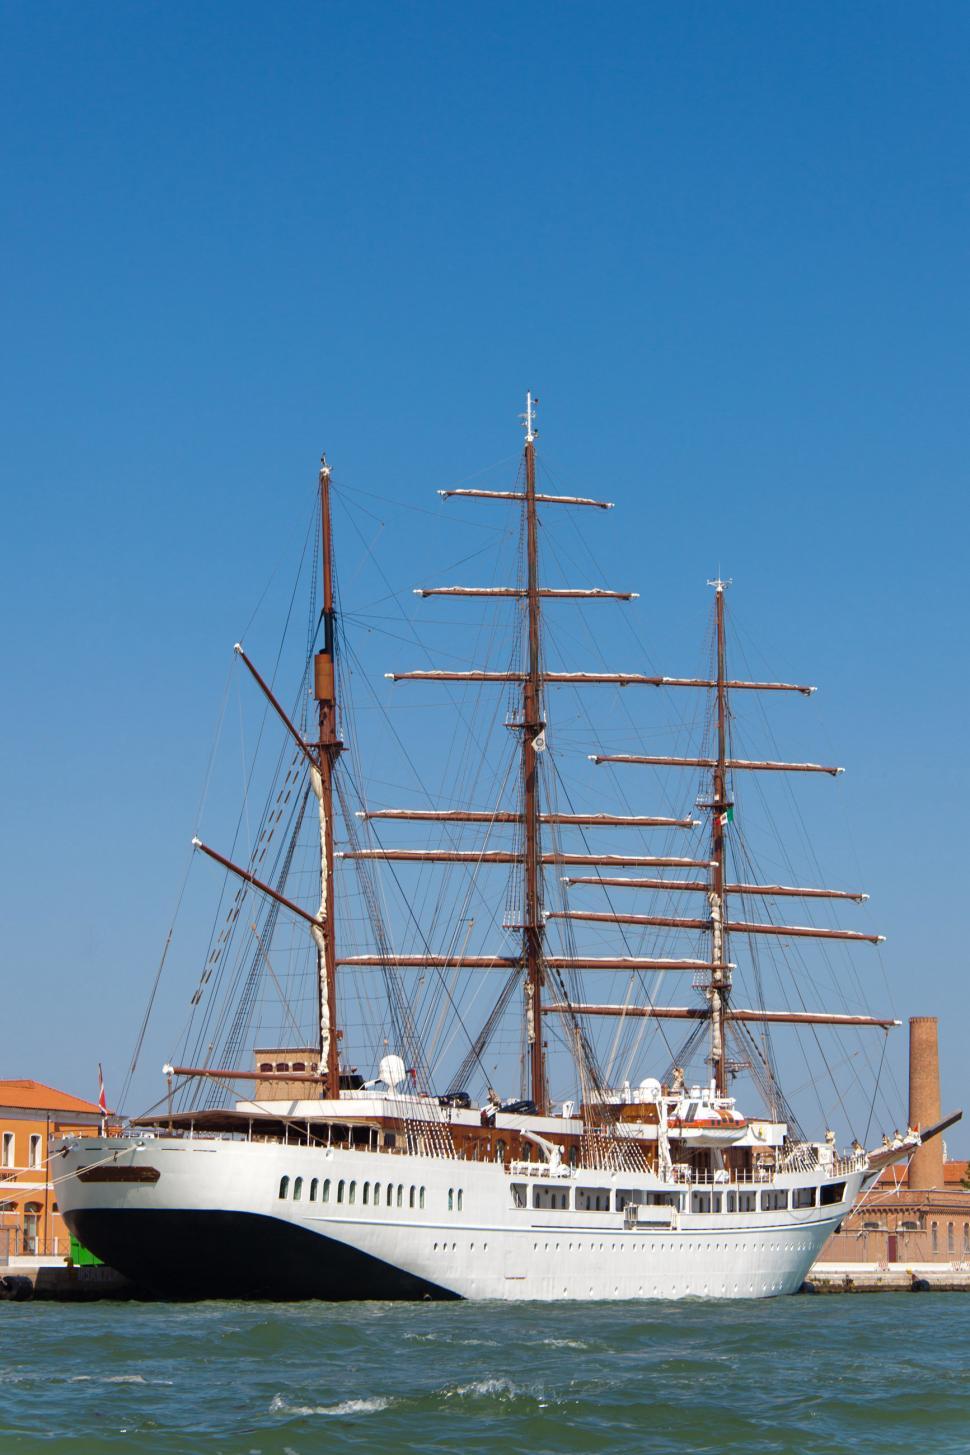 Free Image of Sailing ship 